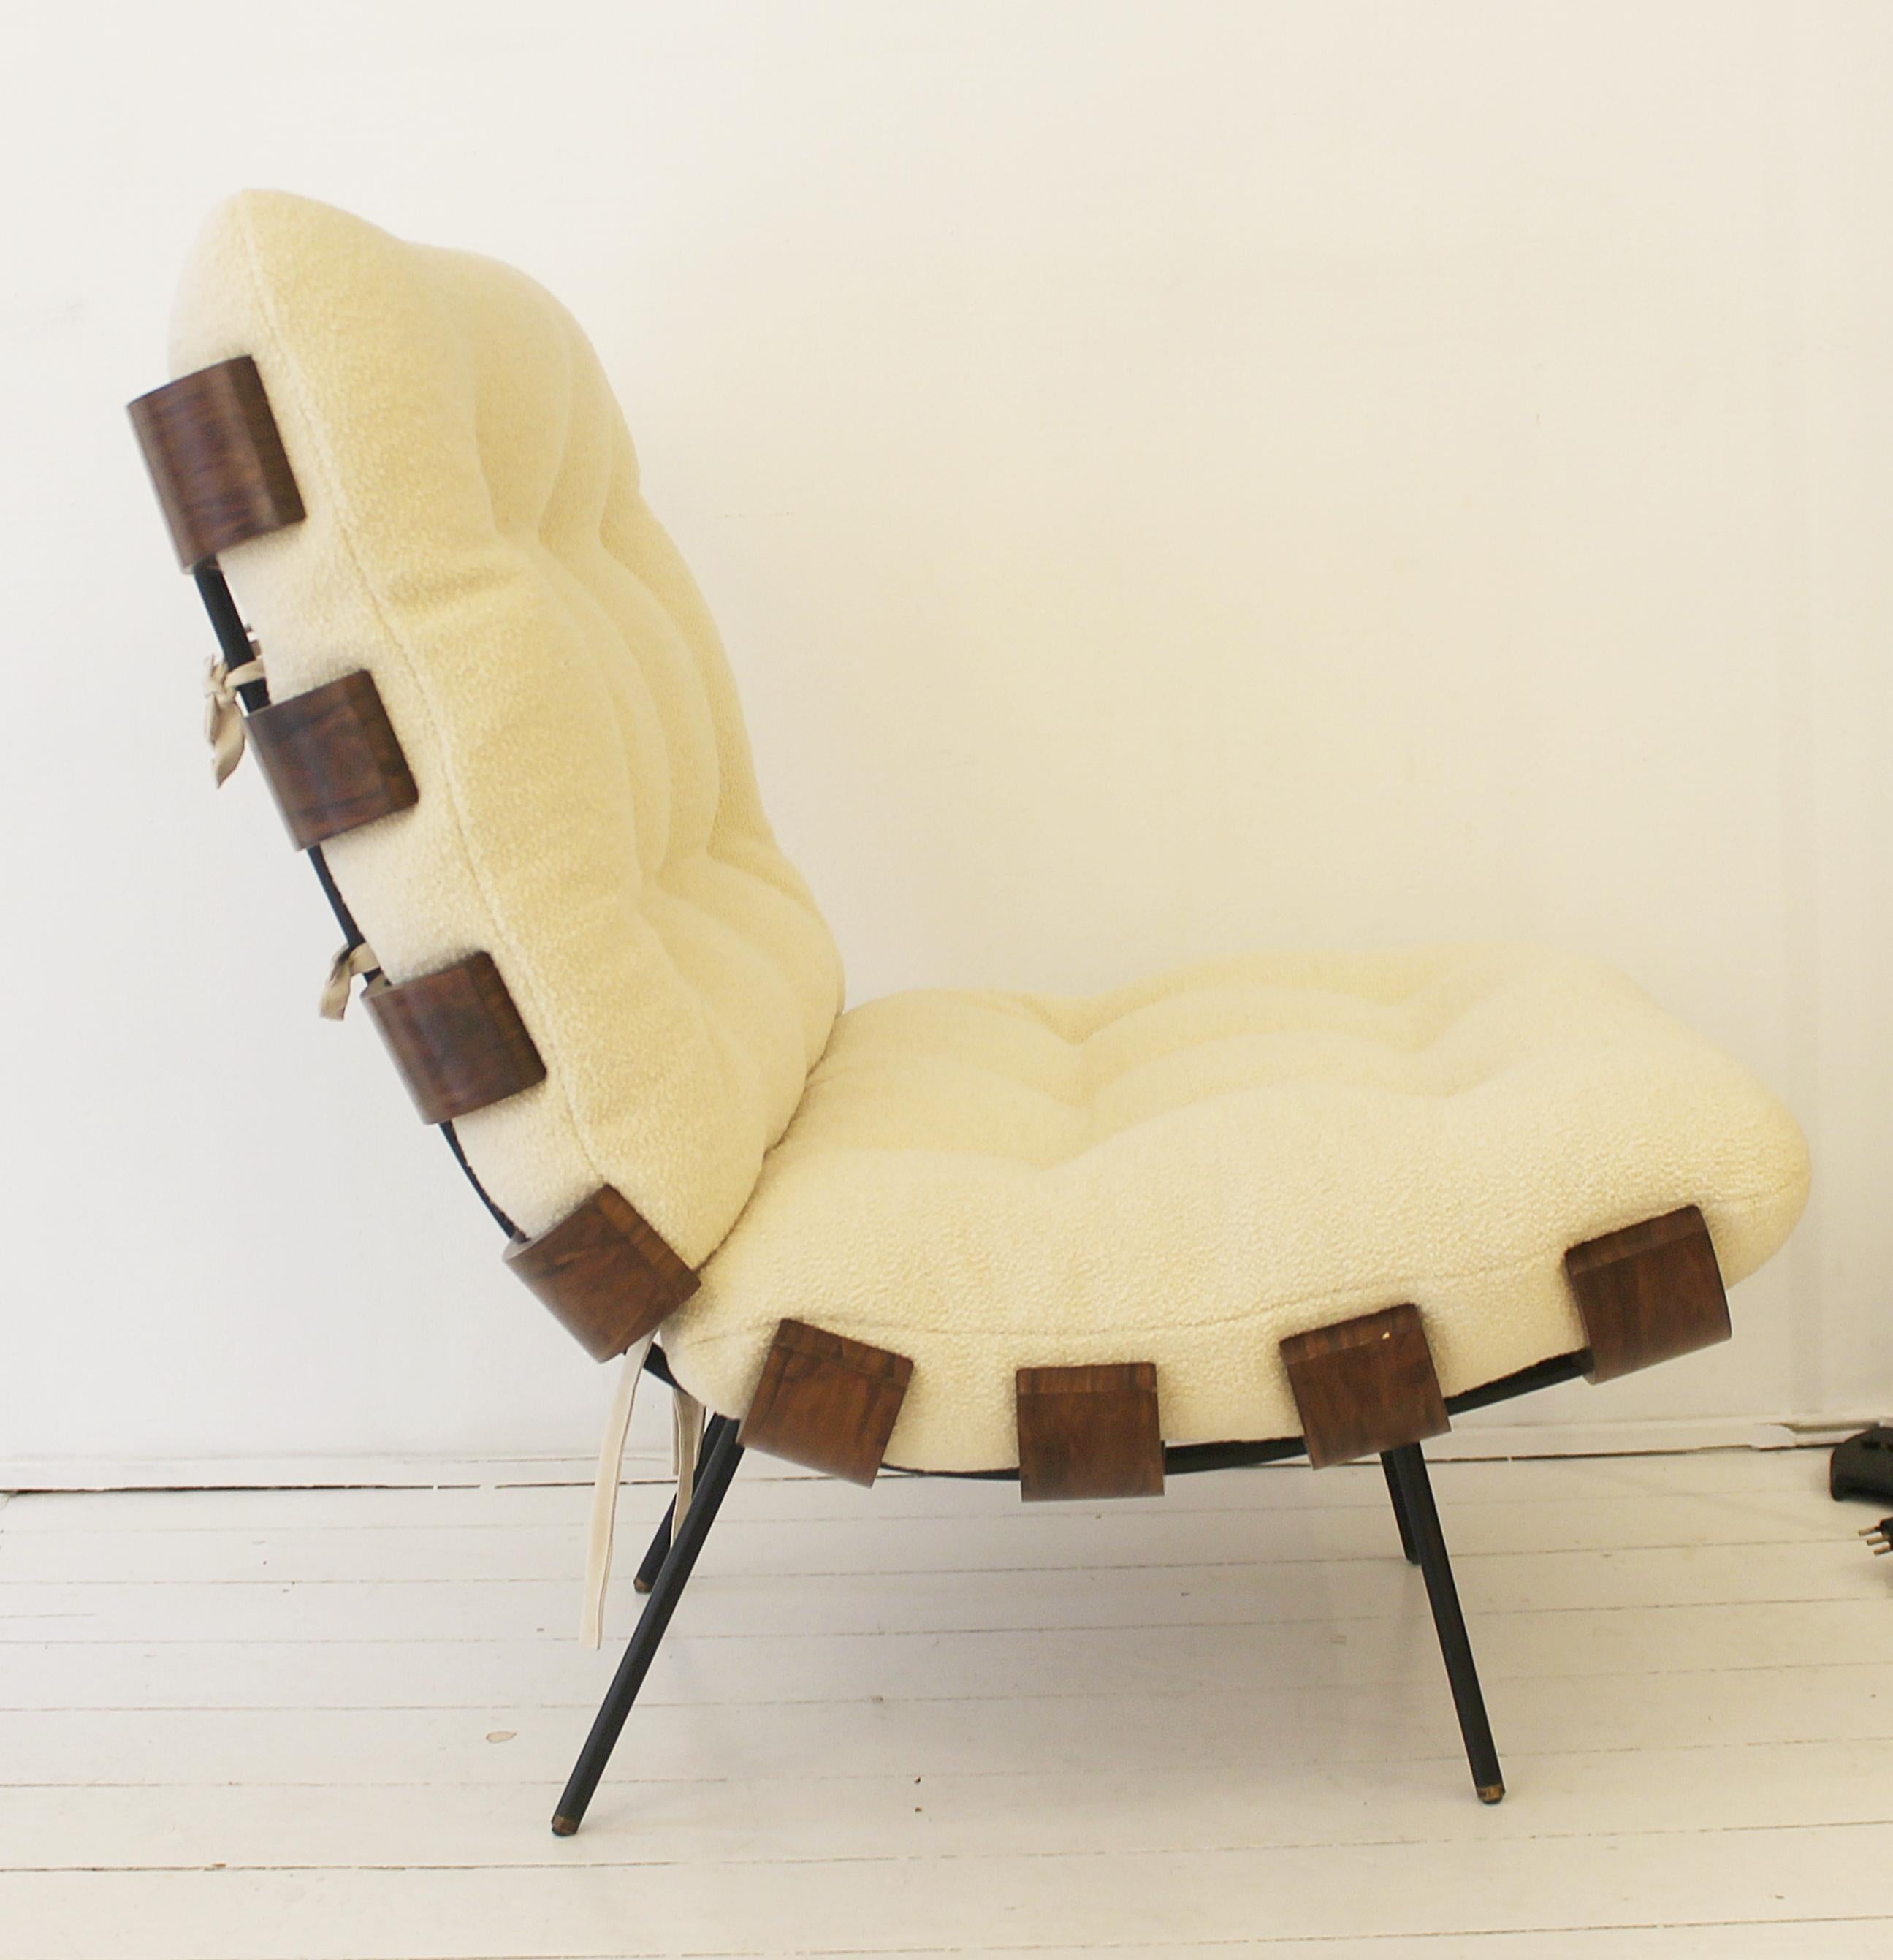 Pair of lounge chairs model 'Costela' by Martin Eisler & Carlo Hauner, Brazil, 1950s.